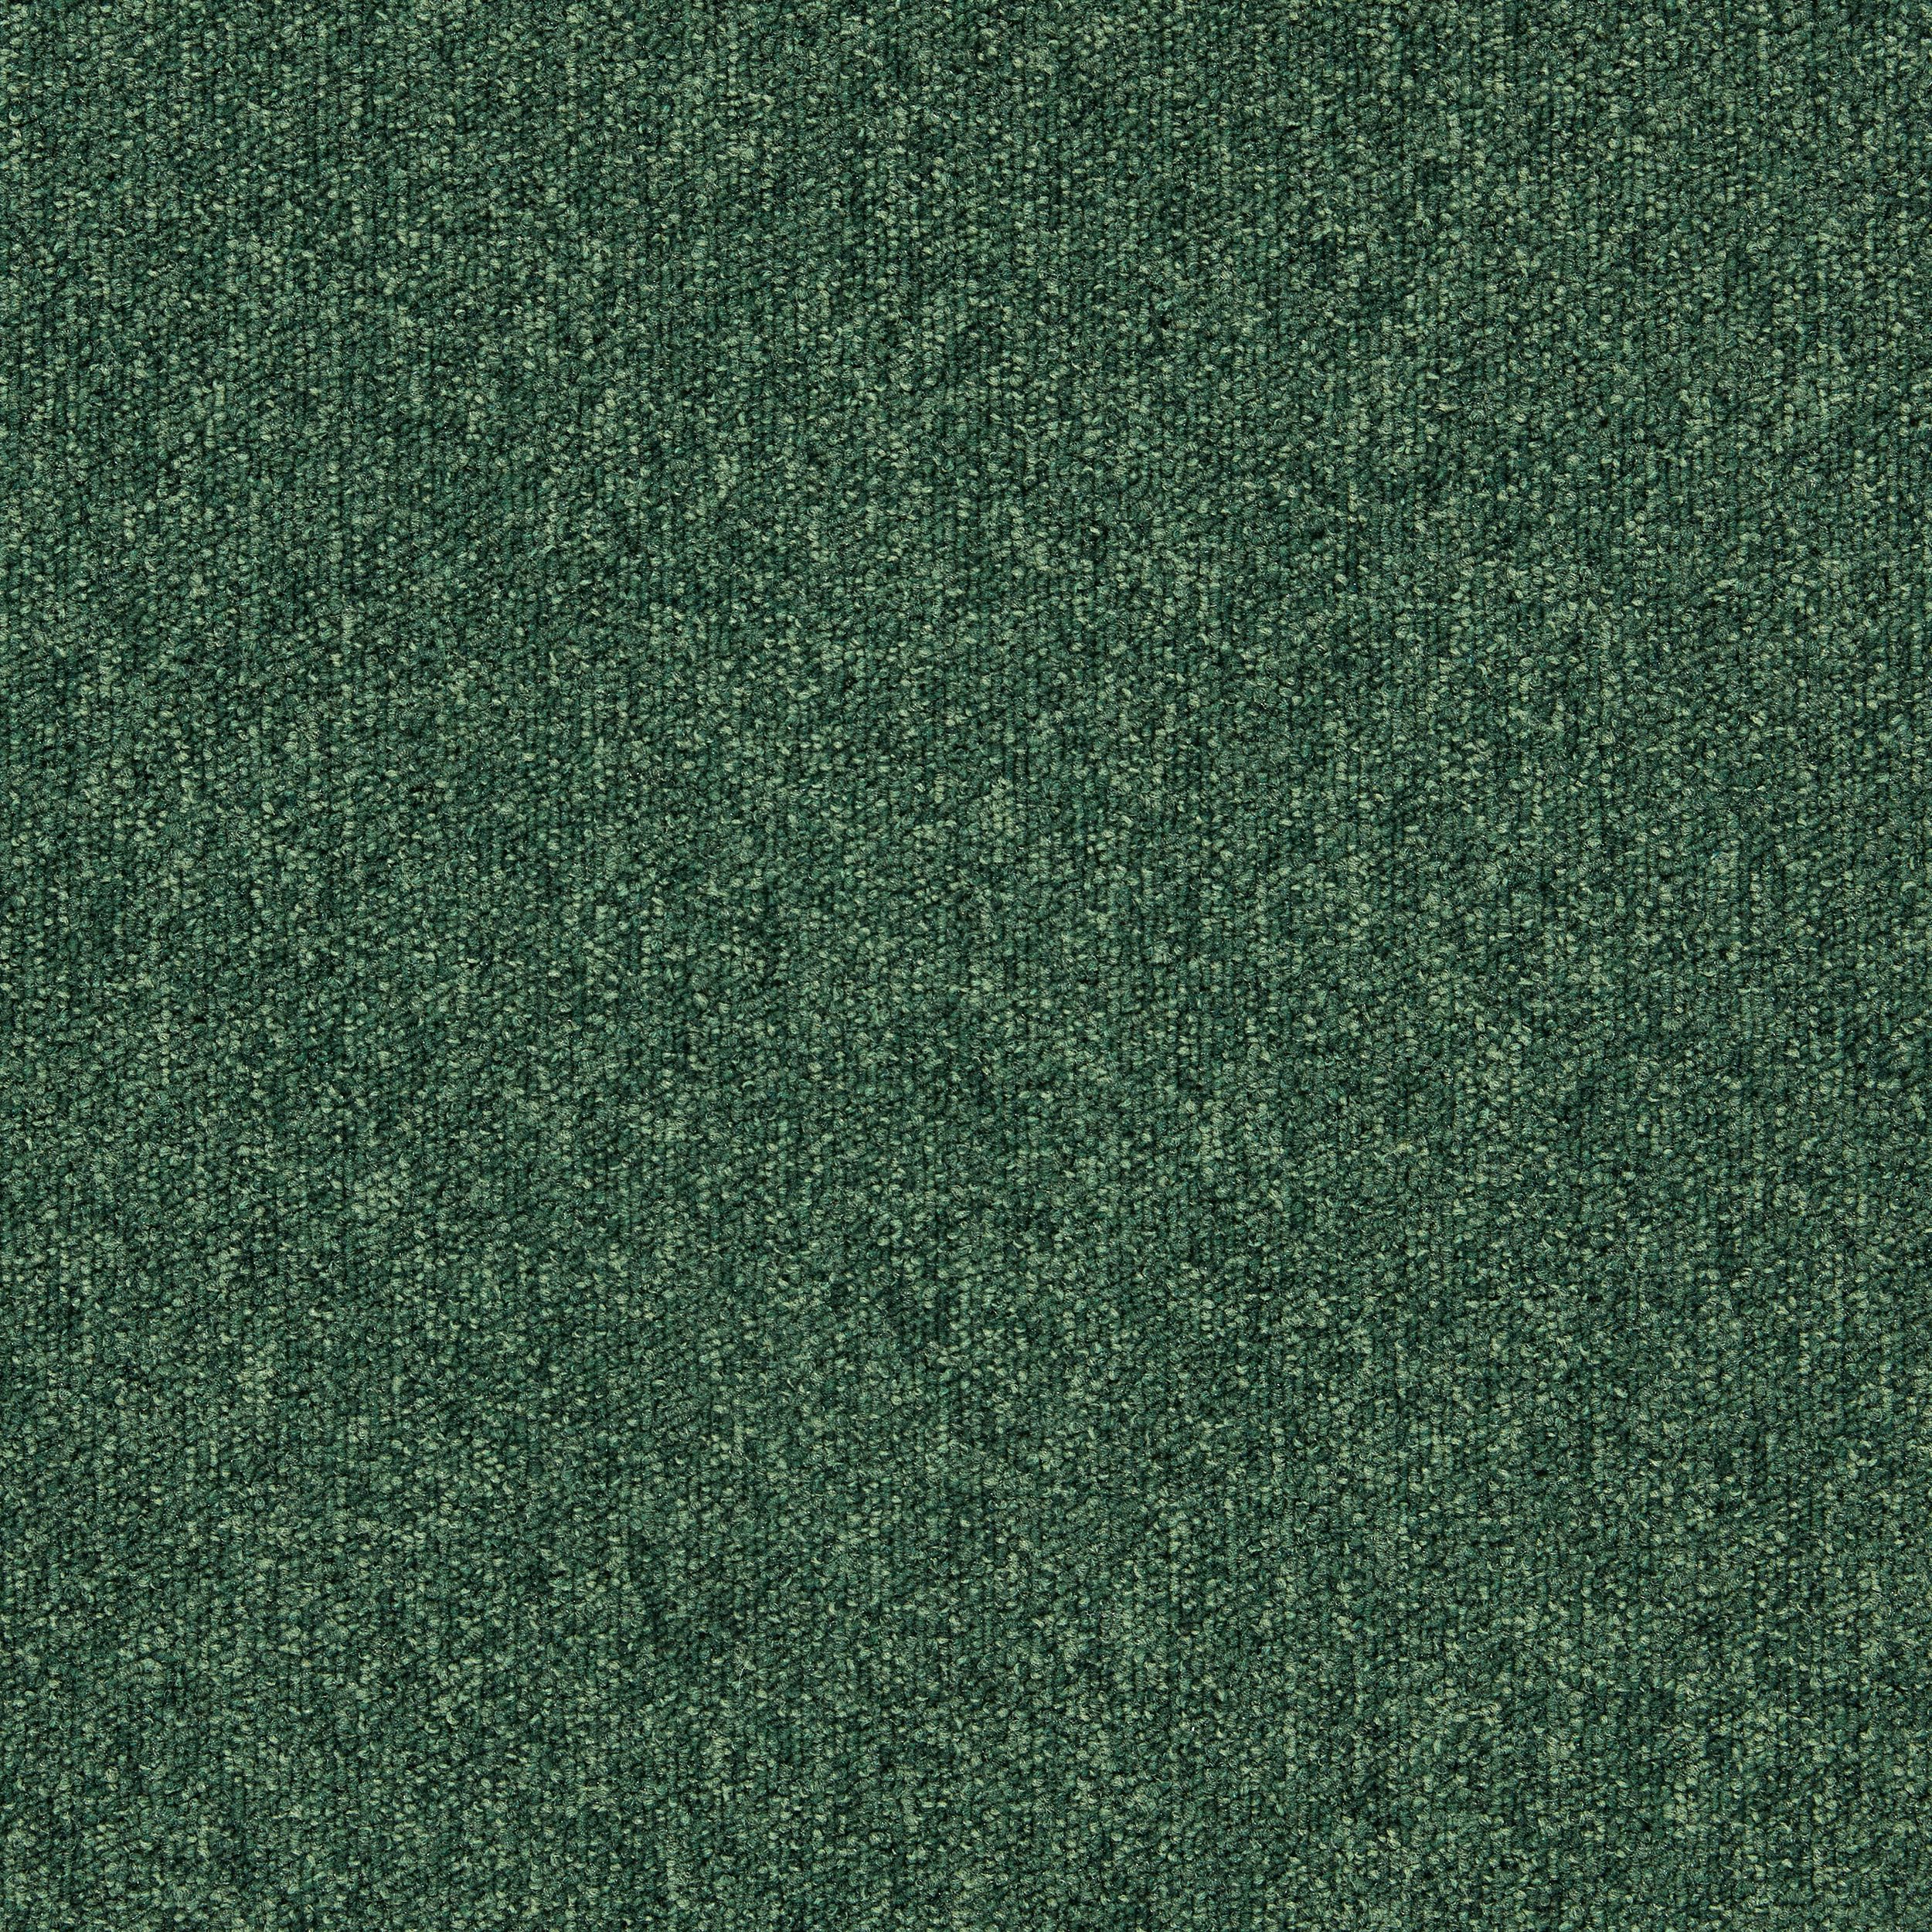 Heuga 727 Carpet Tile In Bottle Green número de imagen 6